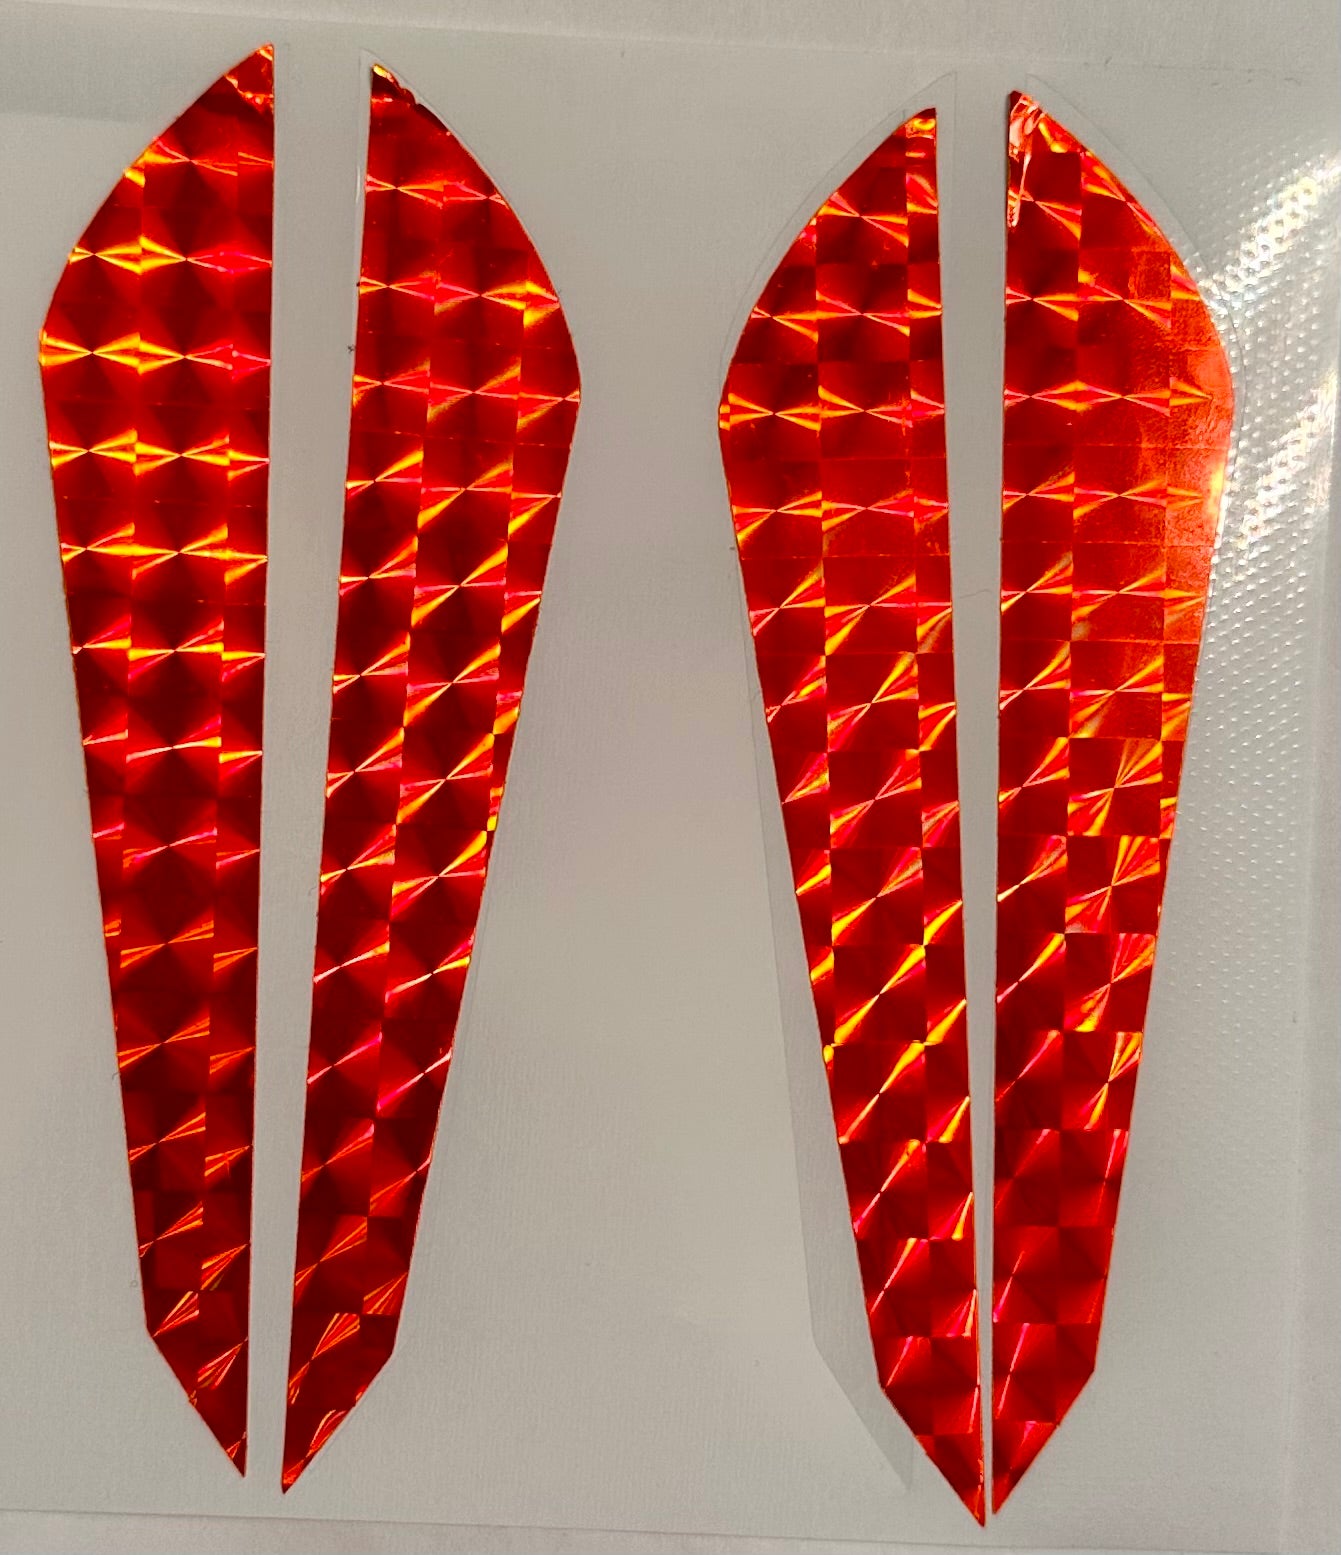 Stickers - Kokopro Sidebar Reflective Flash Stickers for Kokopros Jet Dodger- Bright Orange- Twin Pack